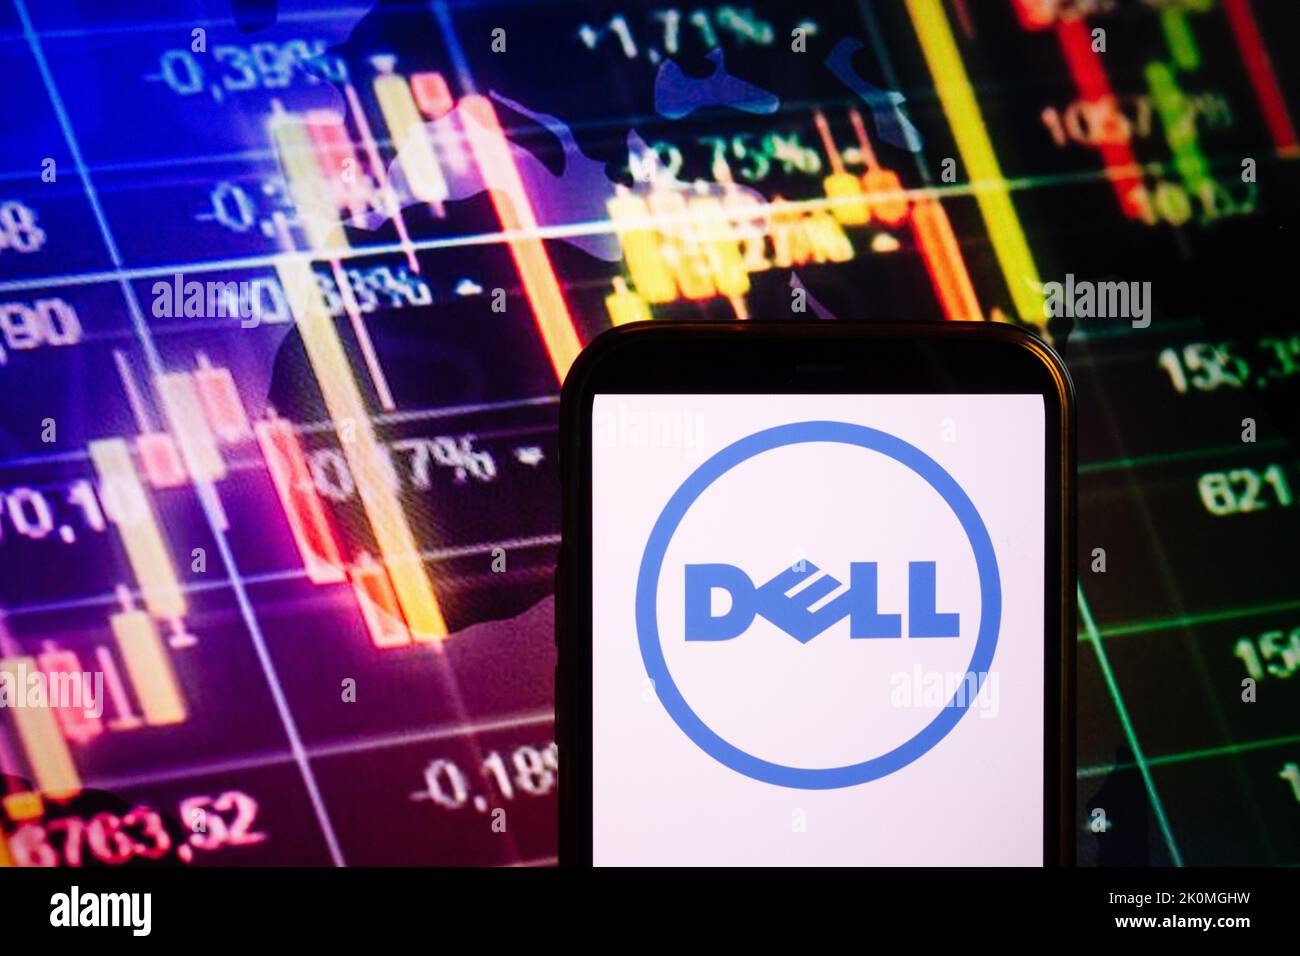 KONSKIE, POLAND - September 10, 2022: Smartphone displaying logo of Dell company on stock exchange diagram background Stock Photo